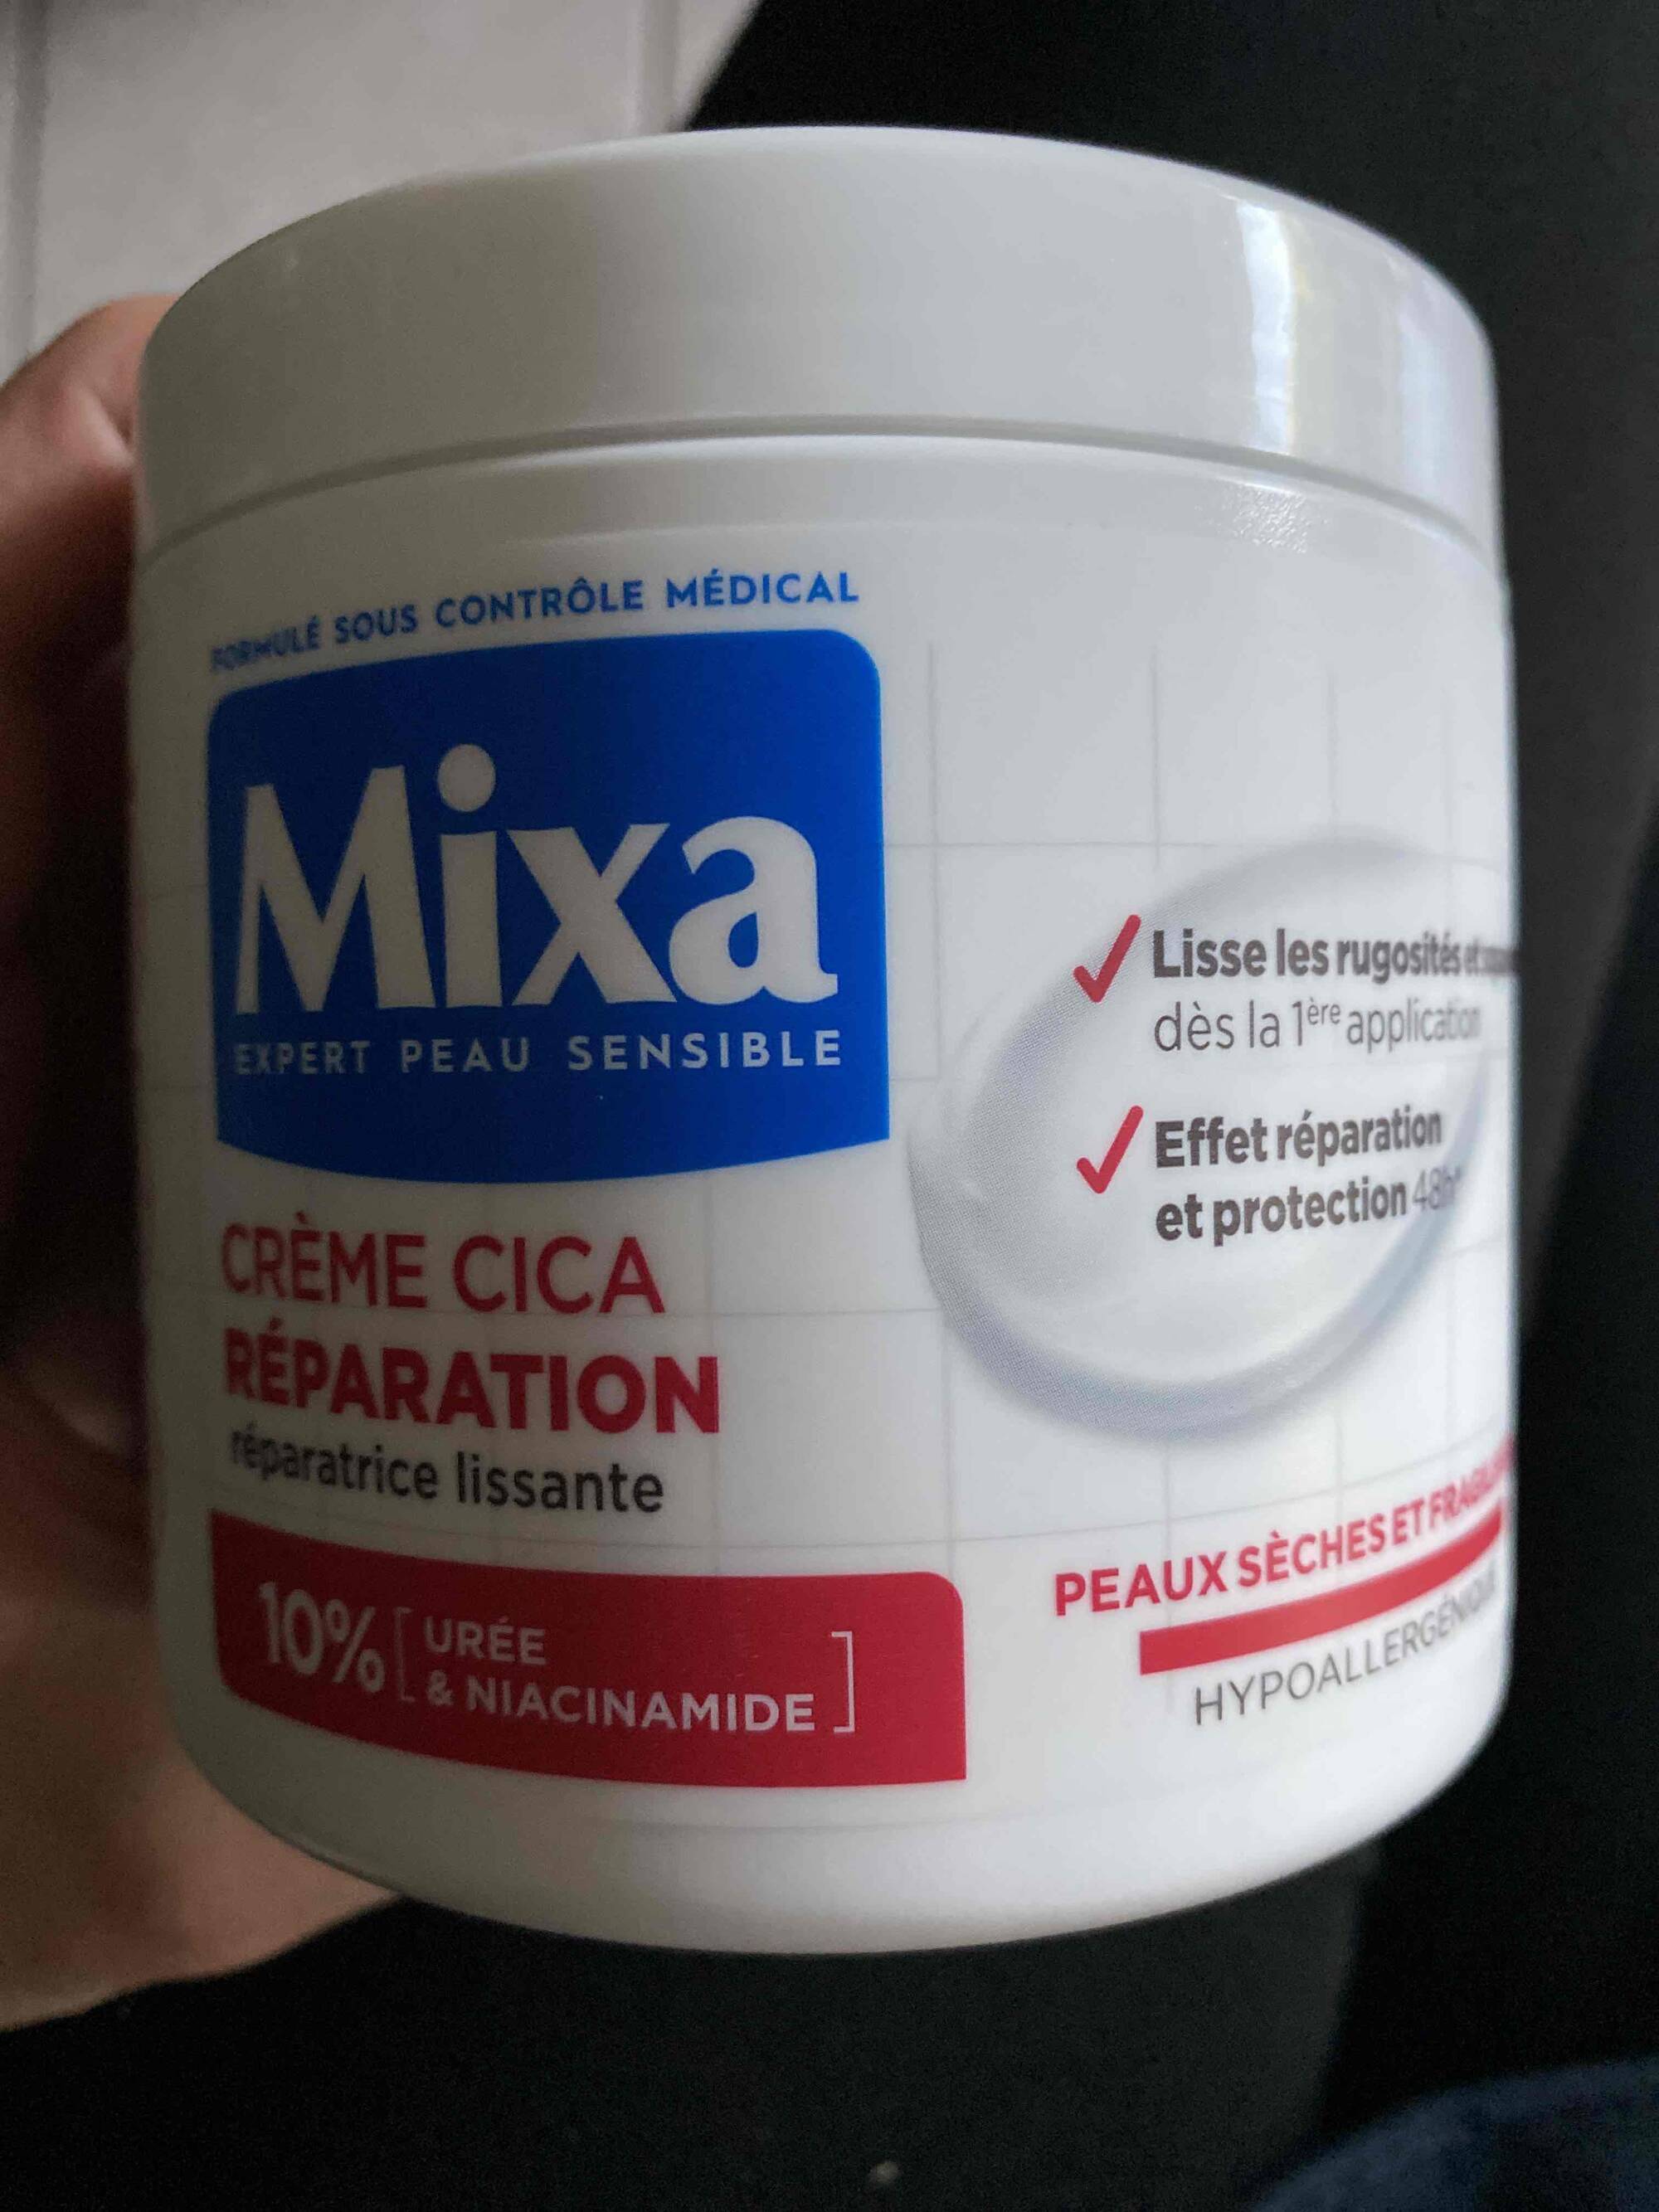 MIXA - Réparation - Crème cica